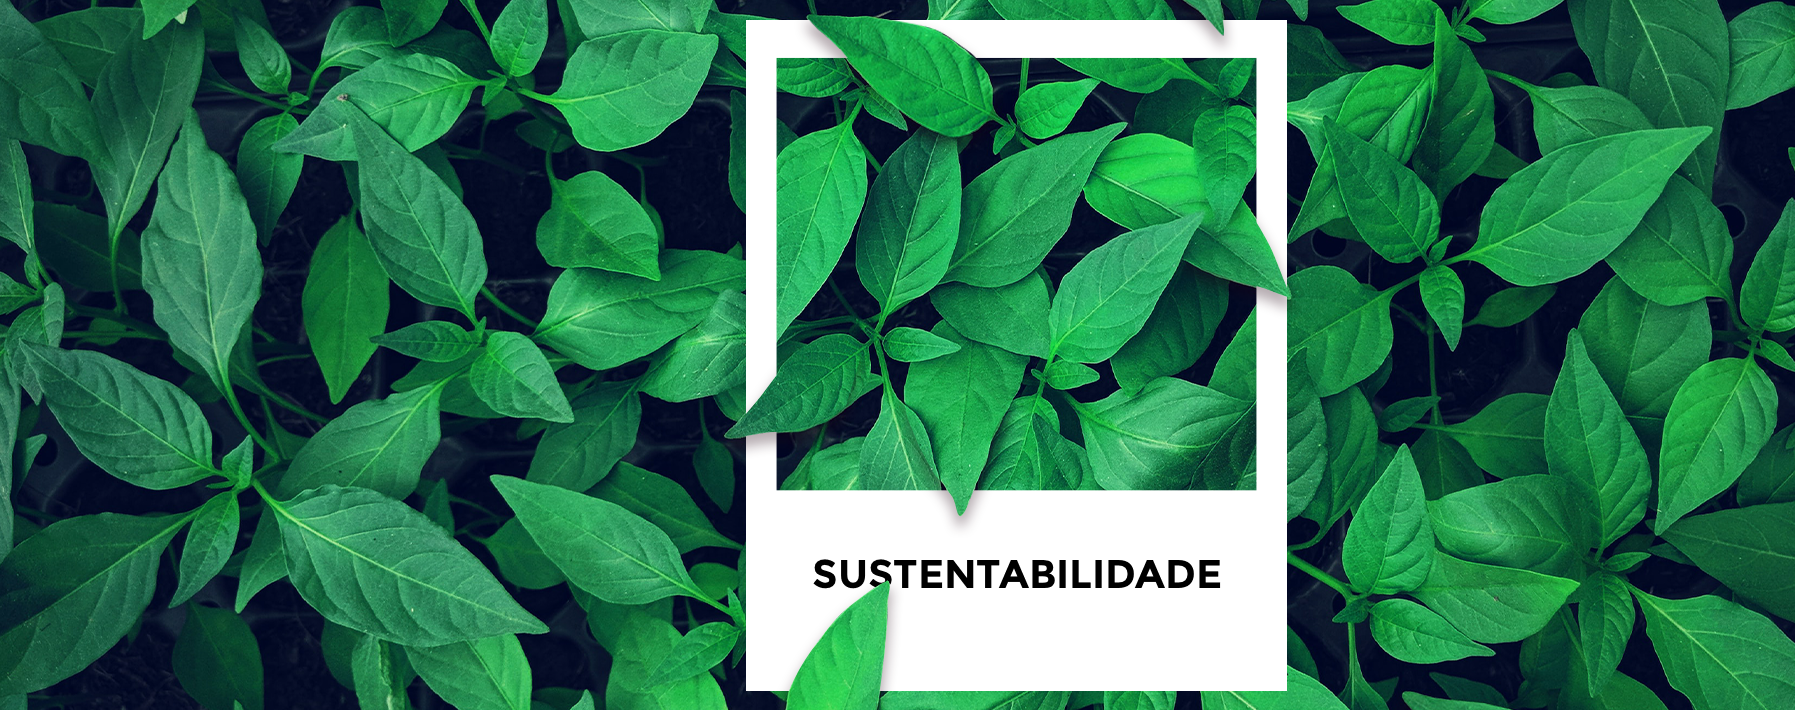 banner sustentabilidade